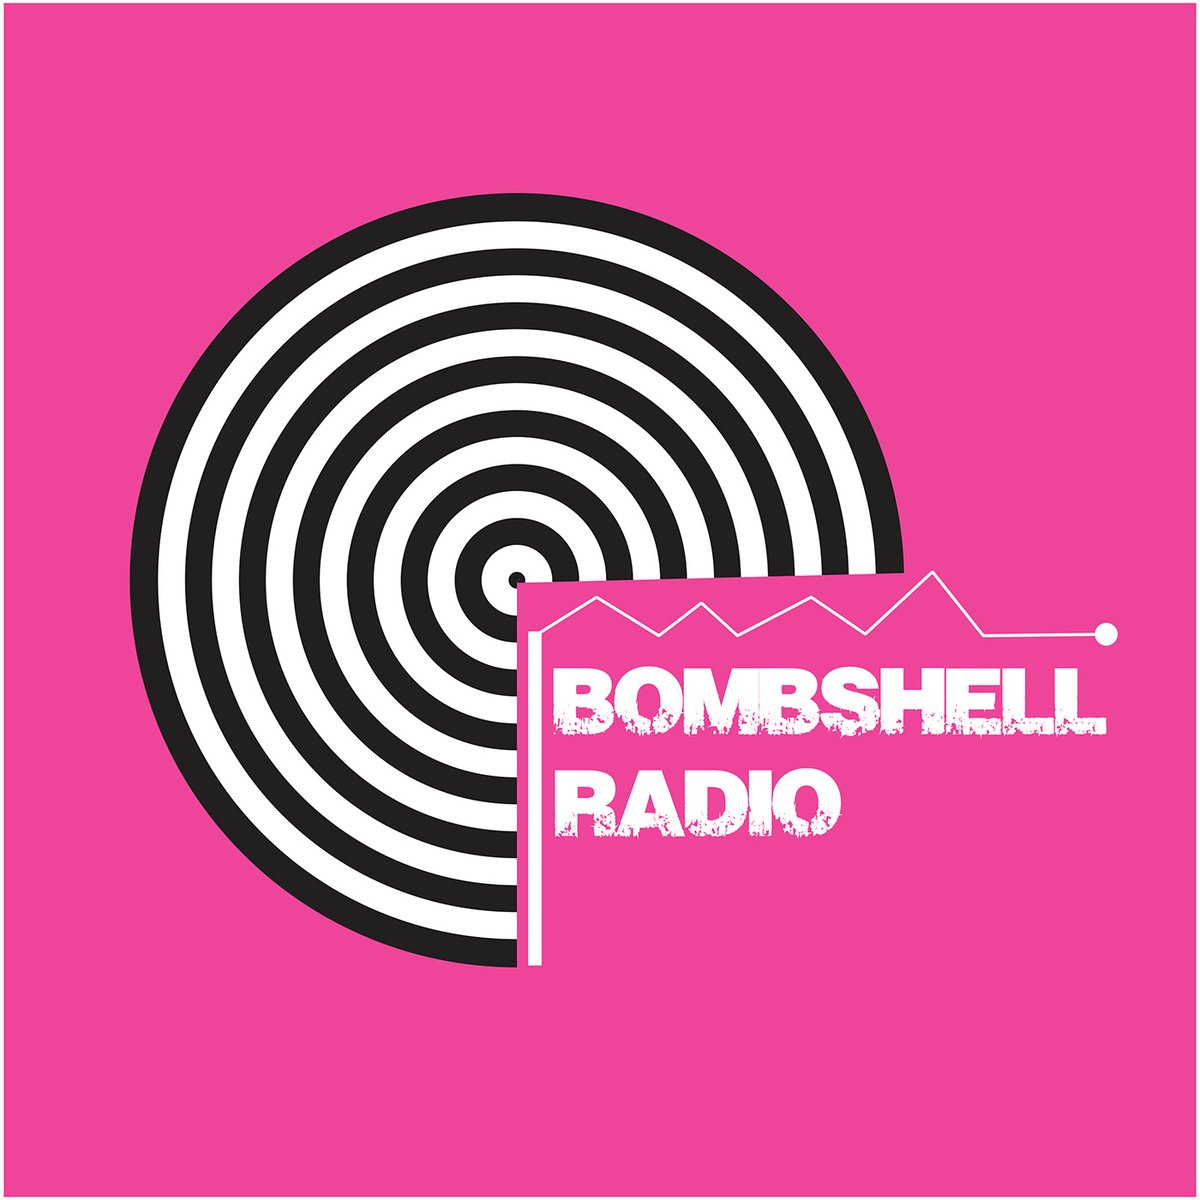 24-7 Radio! bombshellradio.com bombshell radio 1 spot bombshell radio 1 spot Join Us!